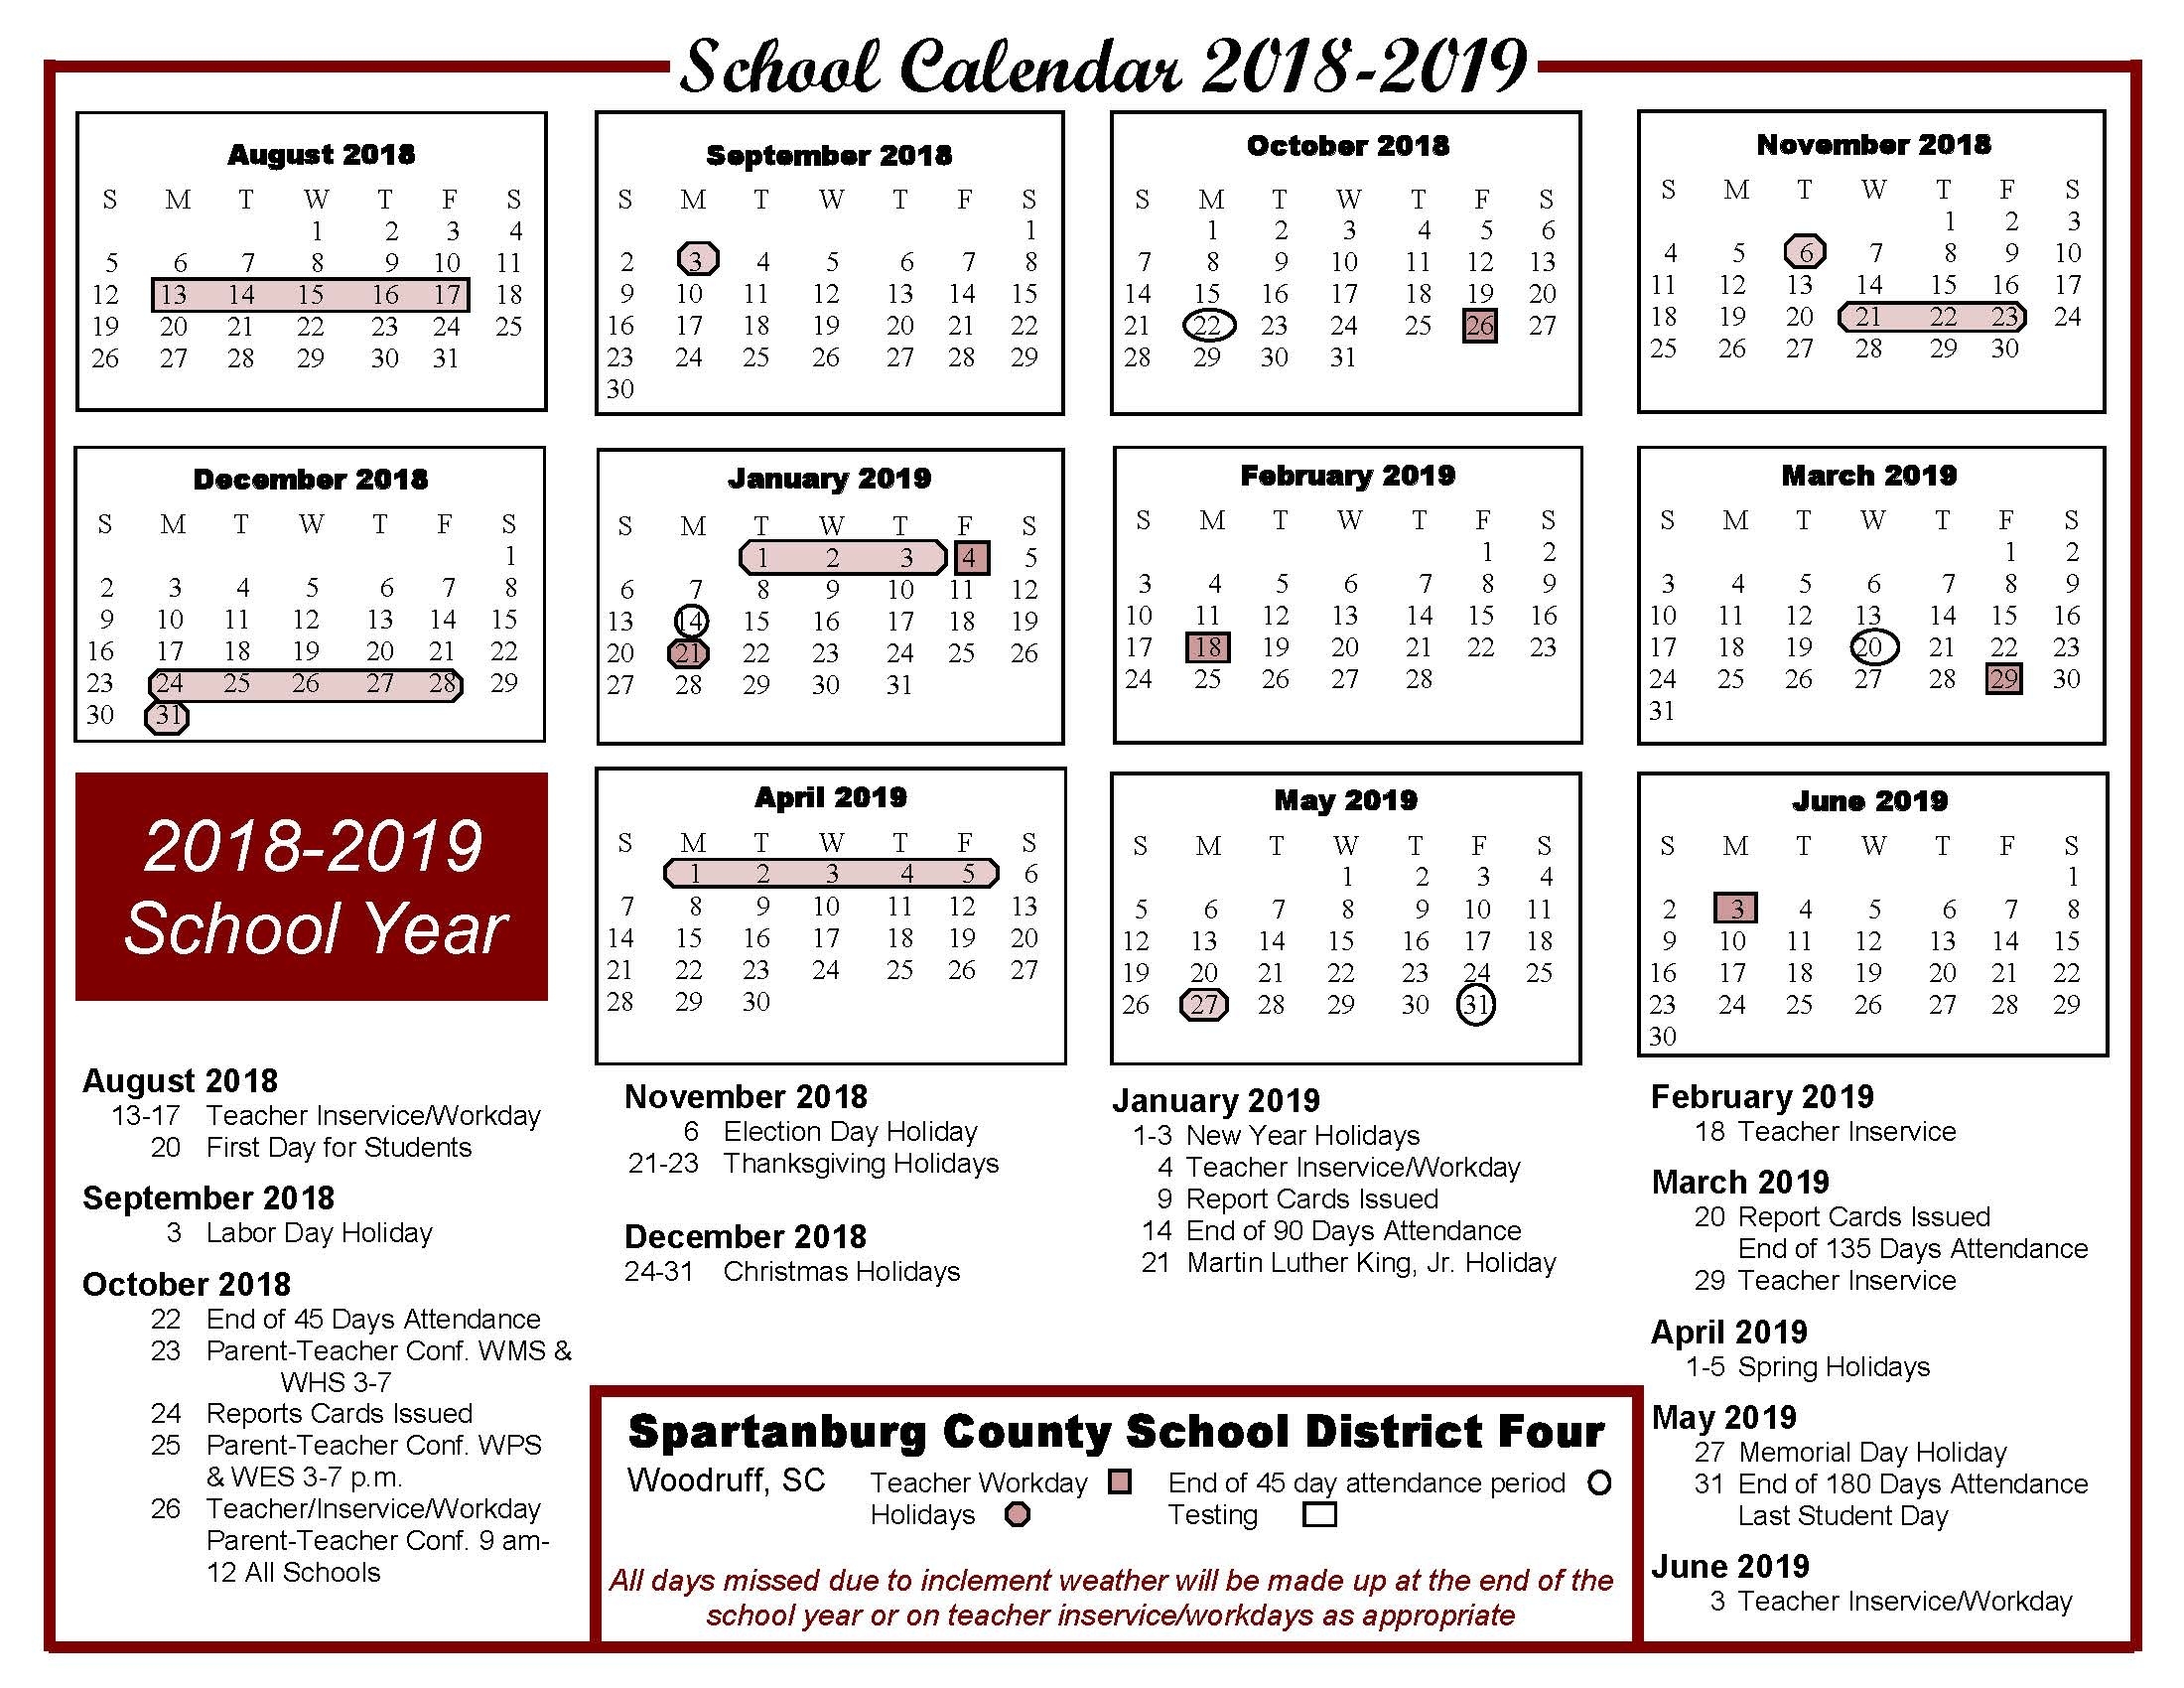 Home - Woodruff Primary School School Calendar Greenville Sc